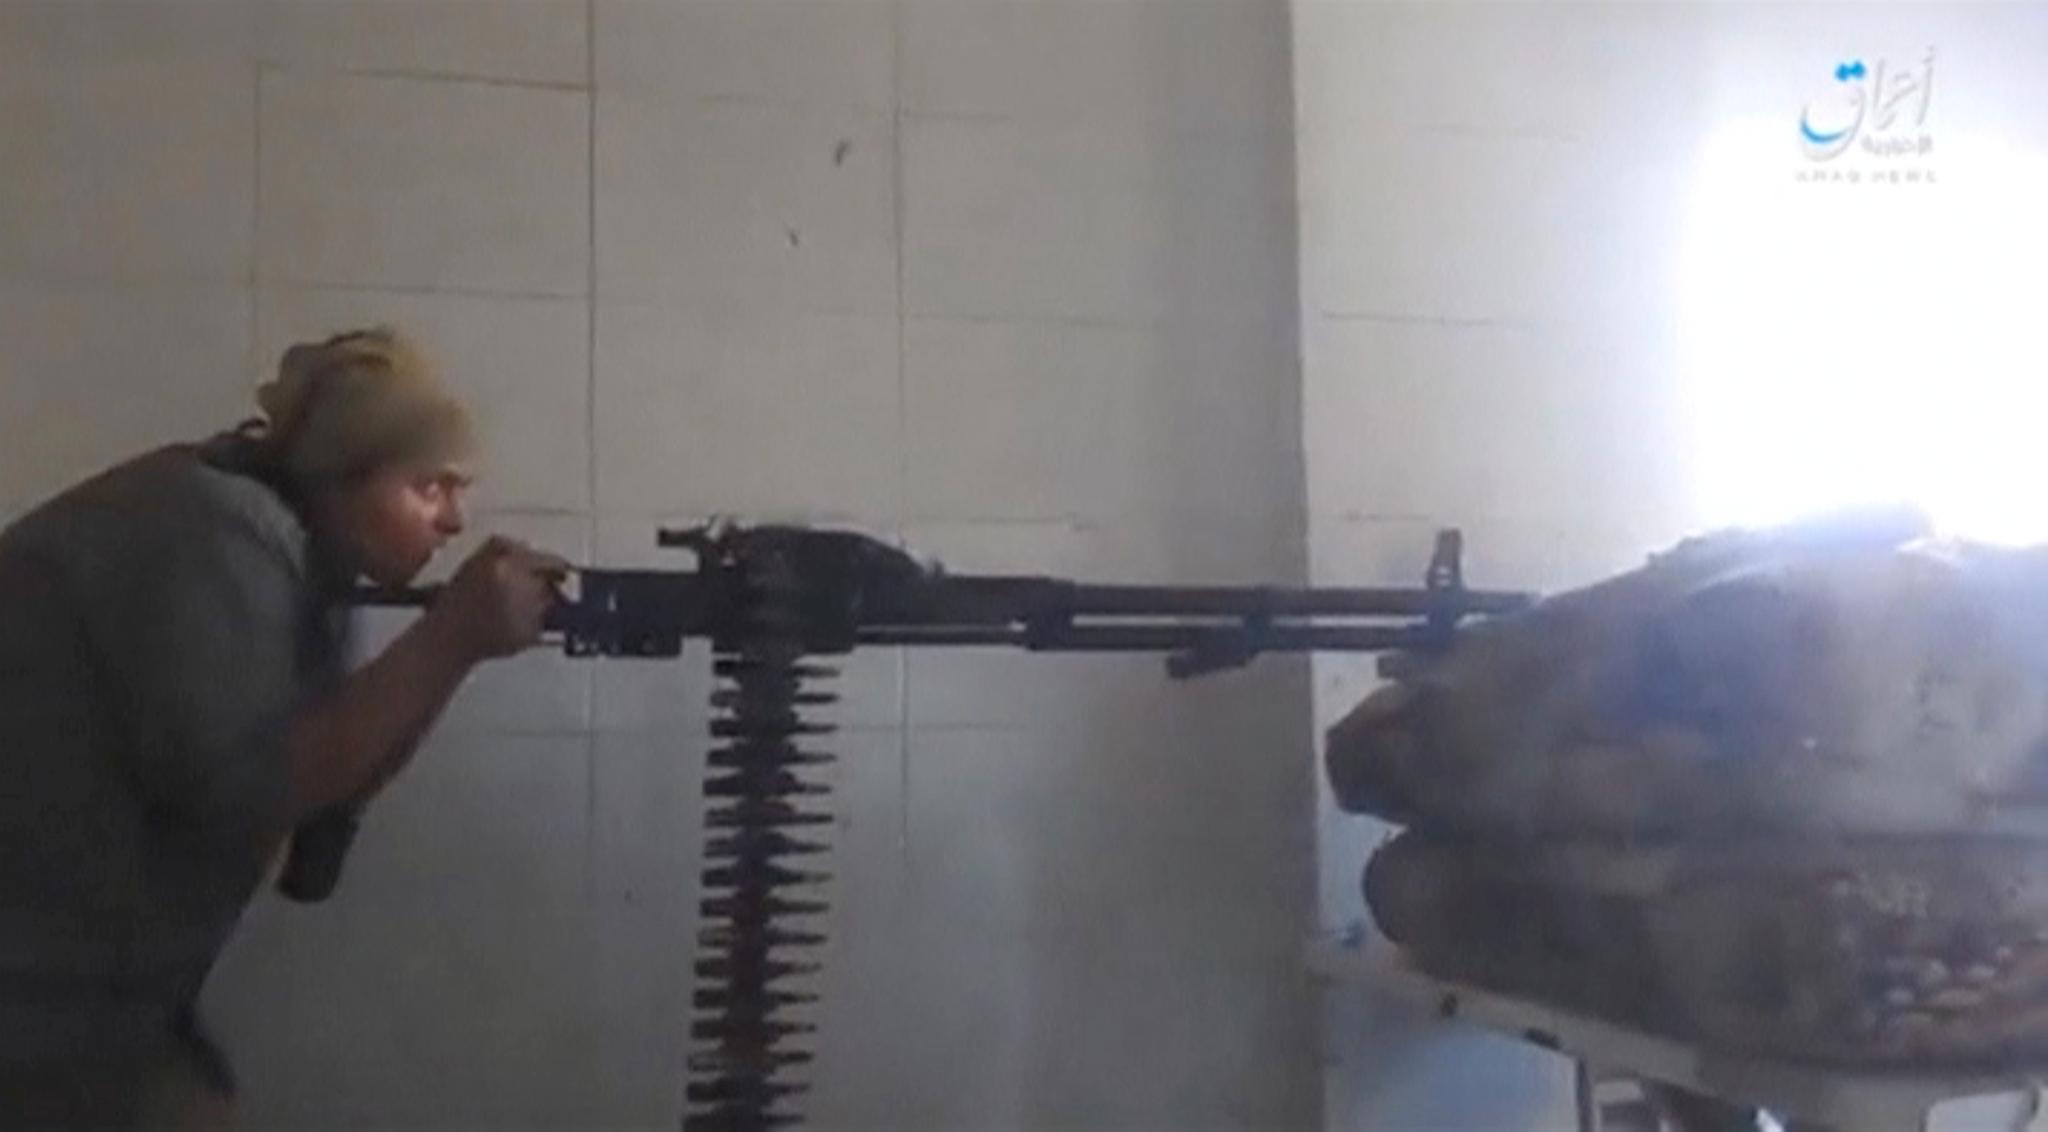 Dette skal ifølge det IS-tilknyttede nyhetsbyrået Amaq være en IS-kriger som avfyrer et våpen i Raqqa. Bildet er hentet fra en video den 15. juli i år.